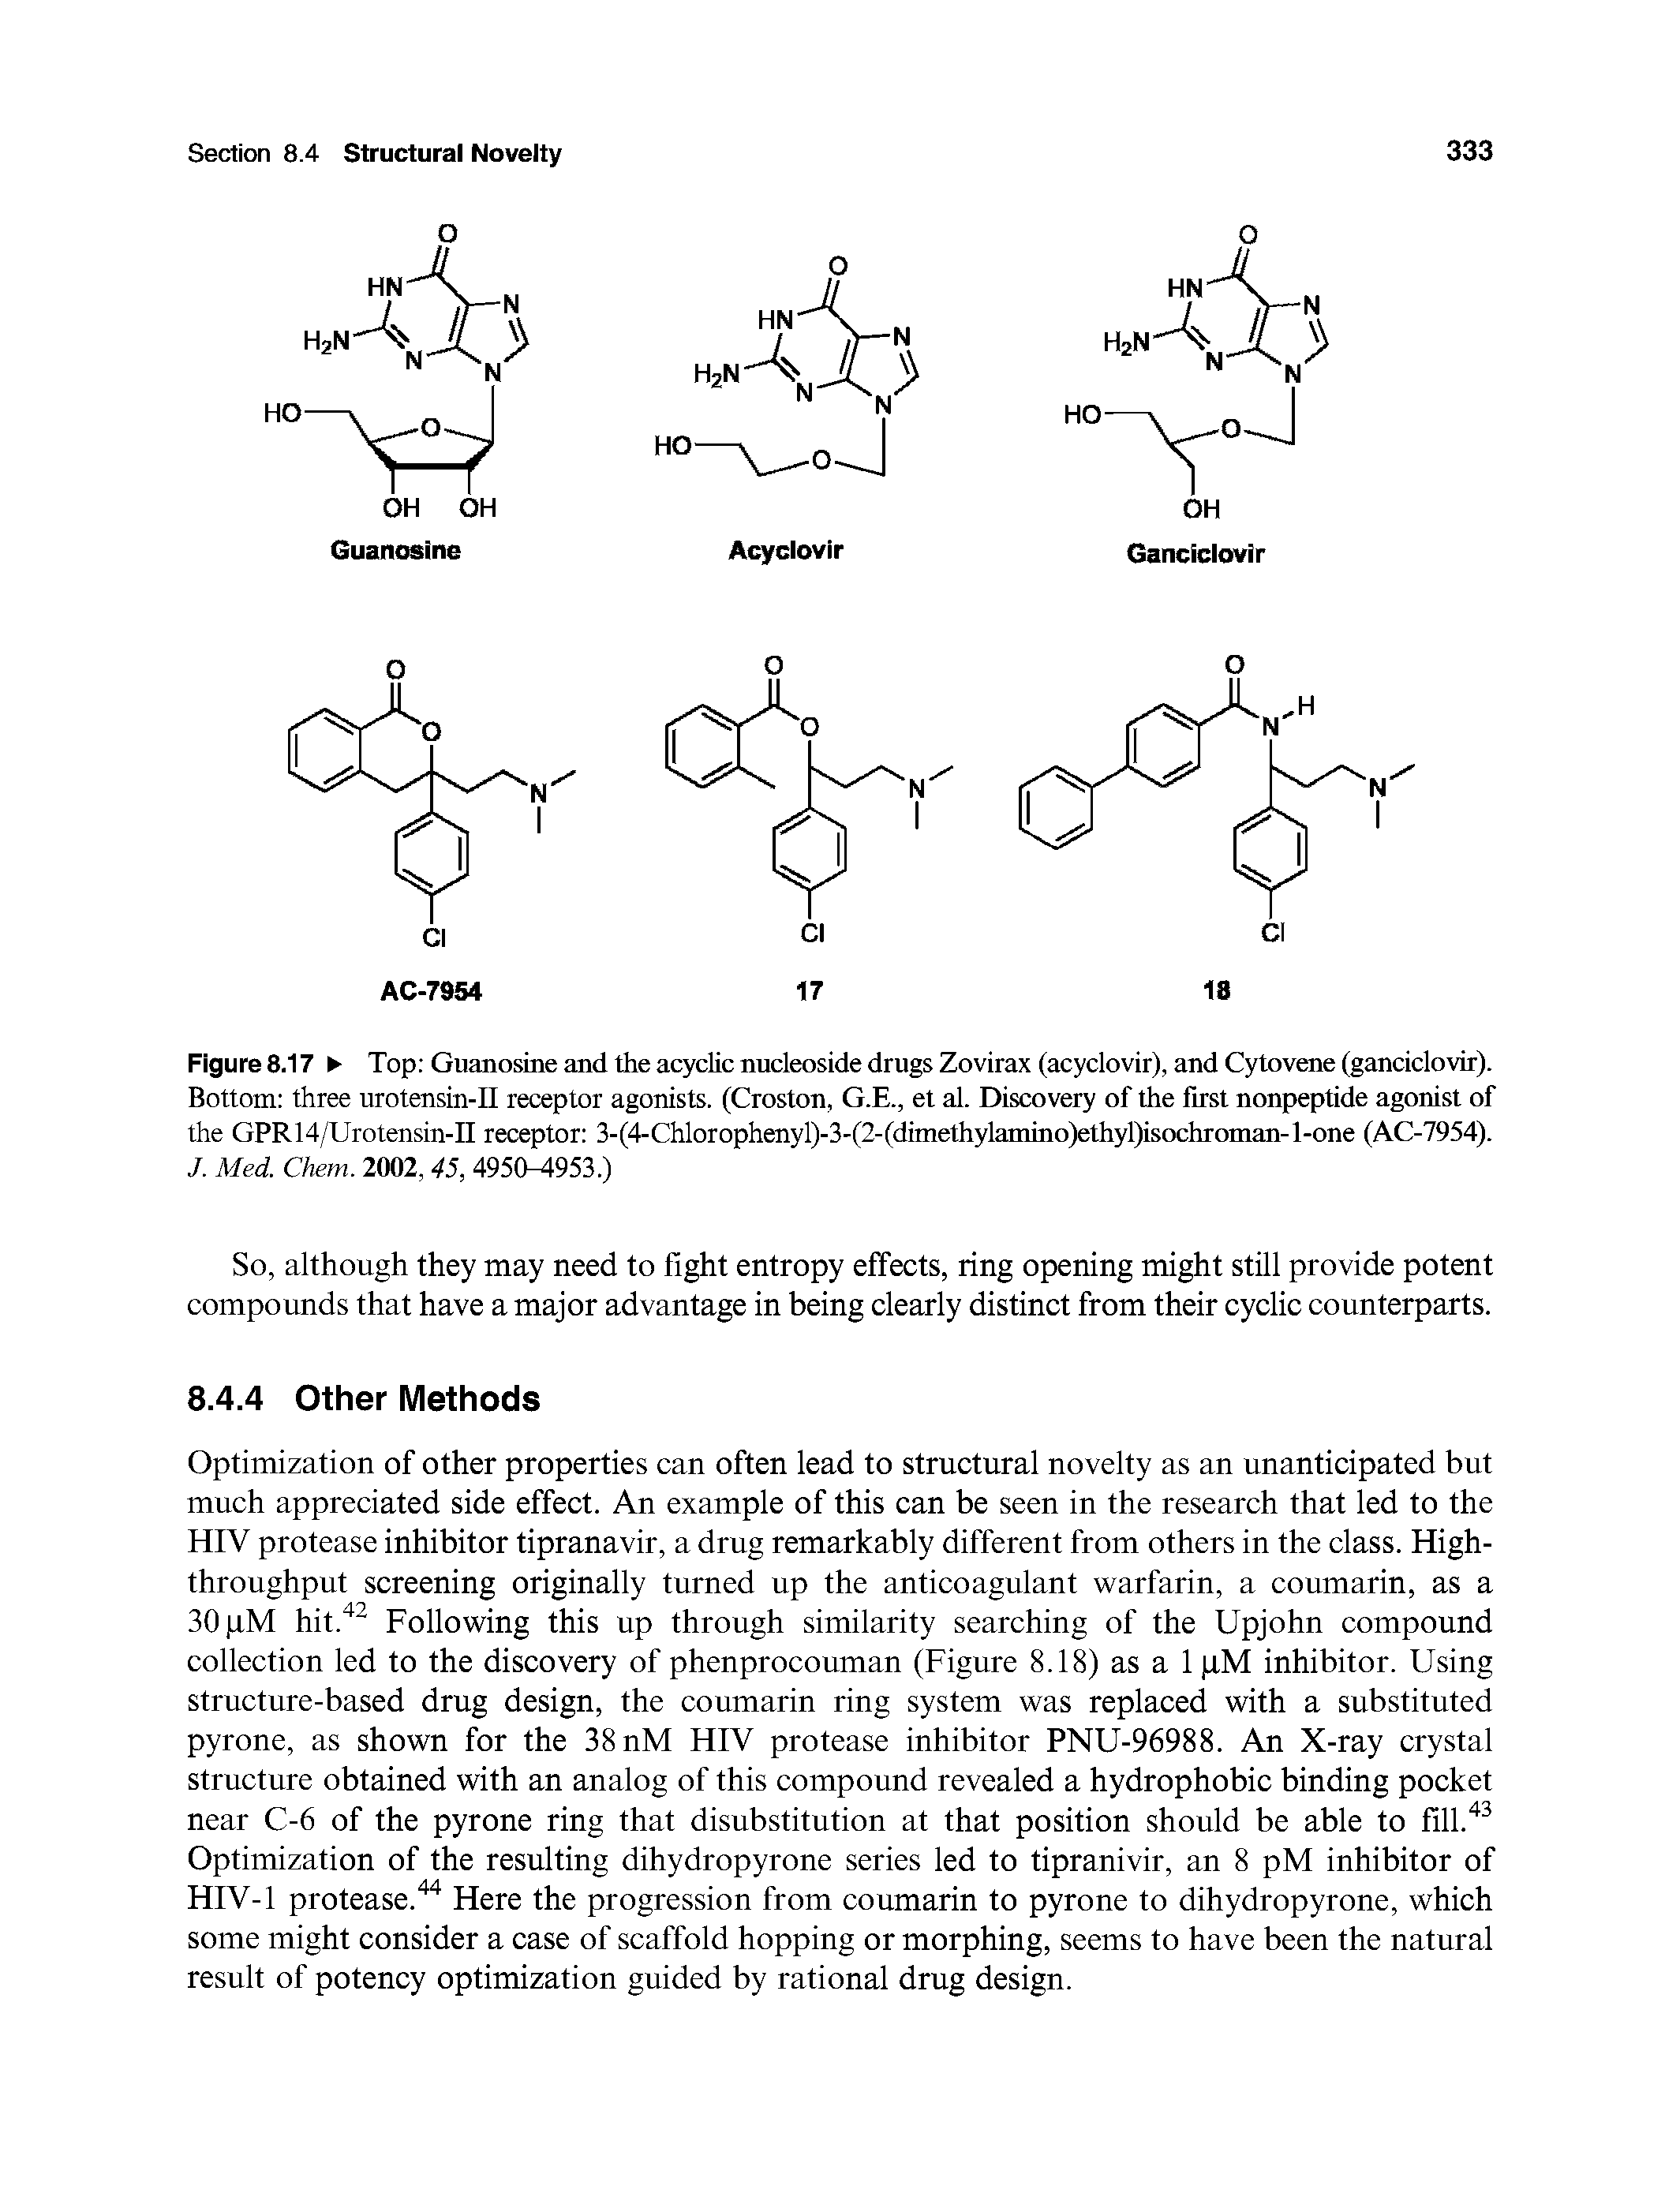 Figure 8.17 Top Guanosine and the acyclic nucleoside drugs Zovirax (acyclovir), and Cytovene (ganciclovir). Bottom three urotensin-II receptor agonists. (Croston, G.E., et al. Discovery of the first nonpeptide agonist of the GPR14/Urotensin-II receptor 3-(4-Chlorophenyl)-3-(2-(dimethylammo)ethyl)isochroman-l-one (AC-7954). J. Med. Chem. 2002, 45, 495(M953.)...